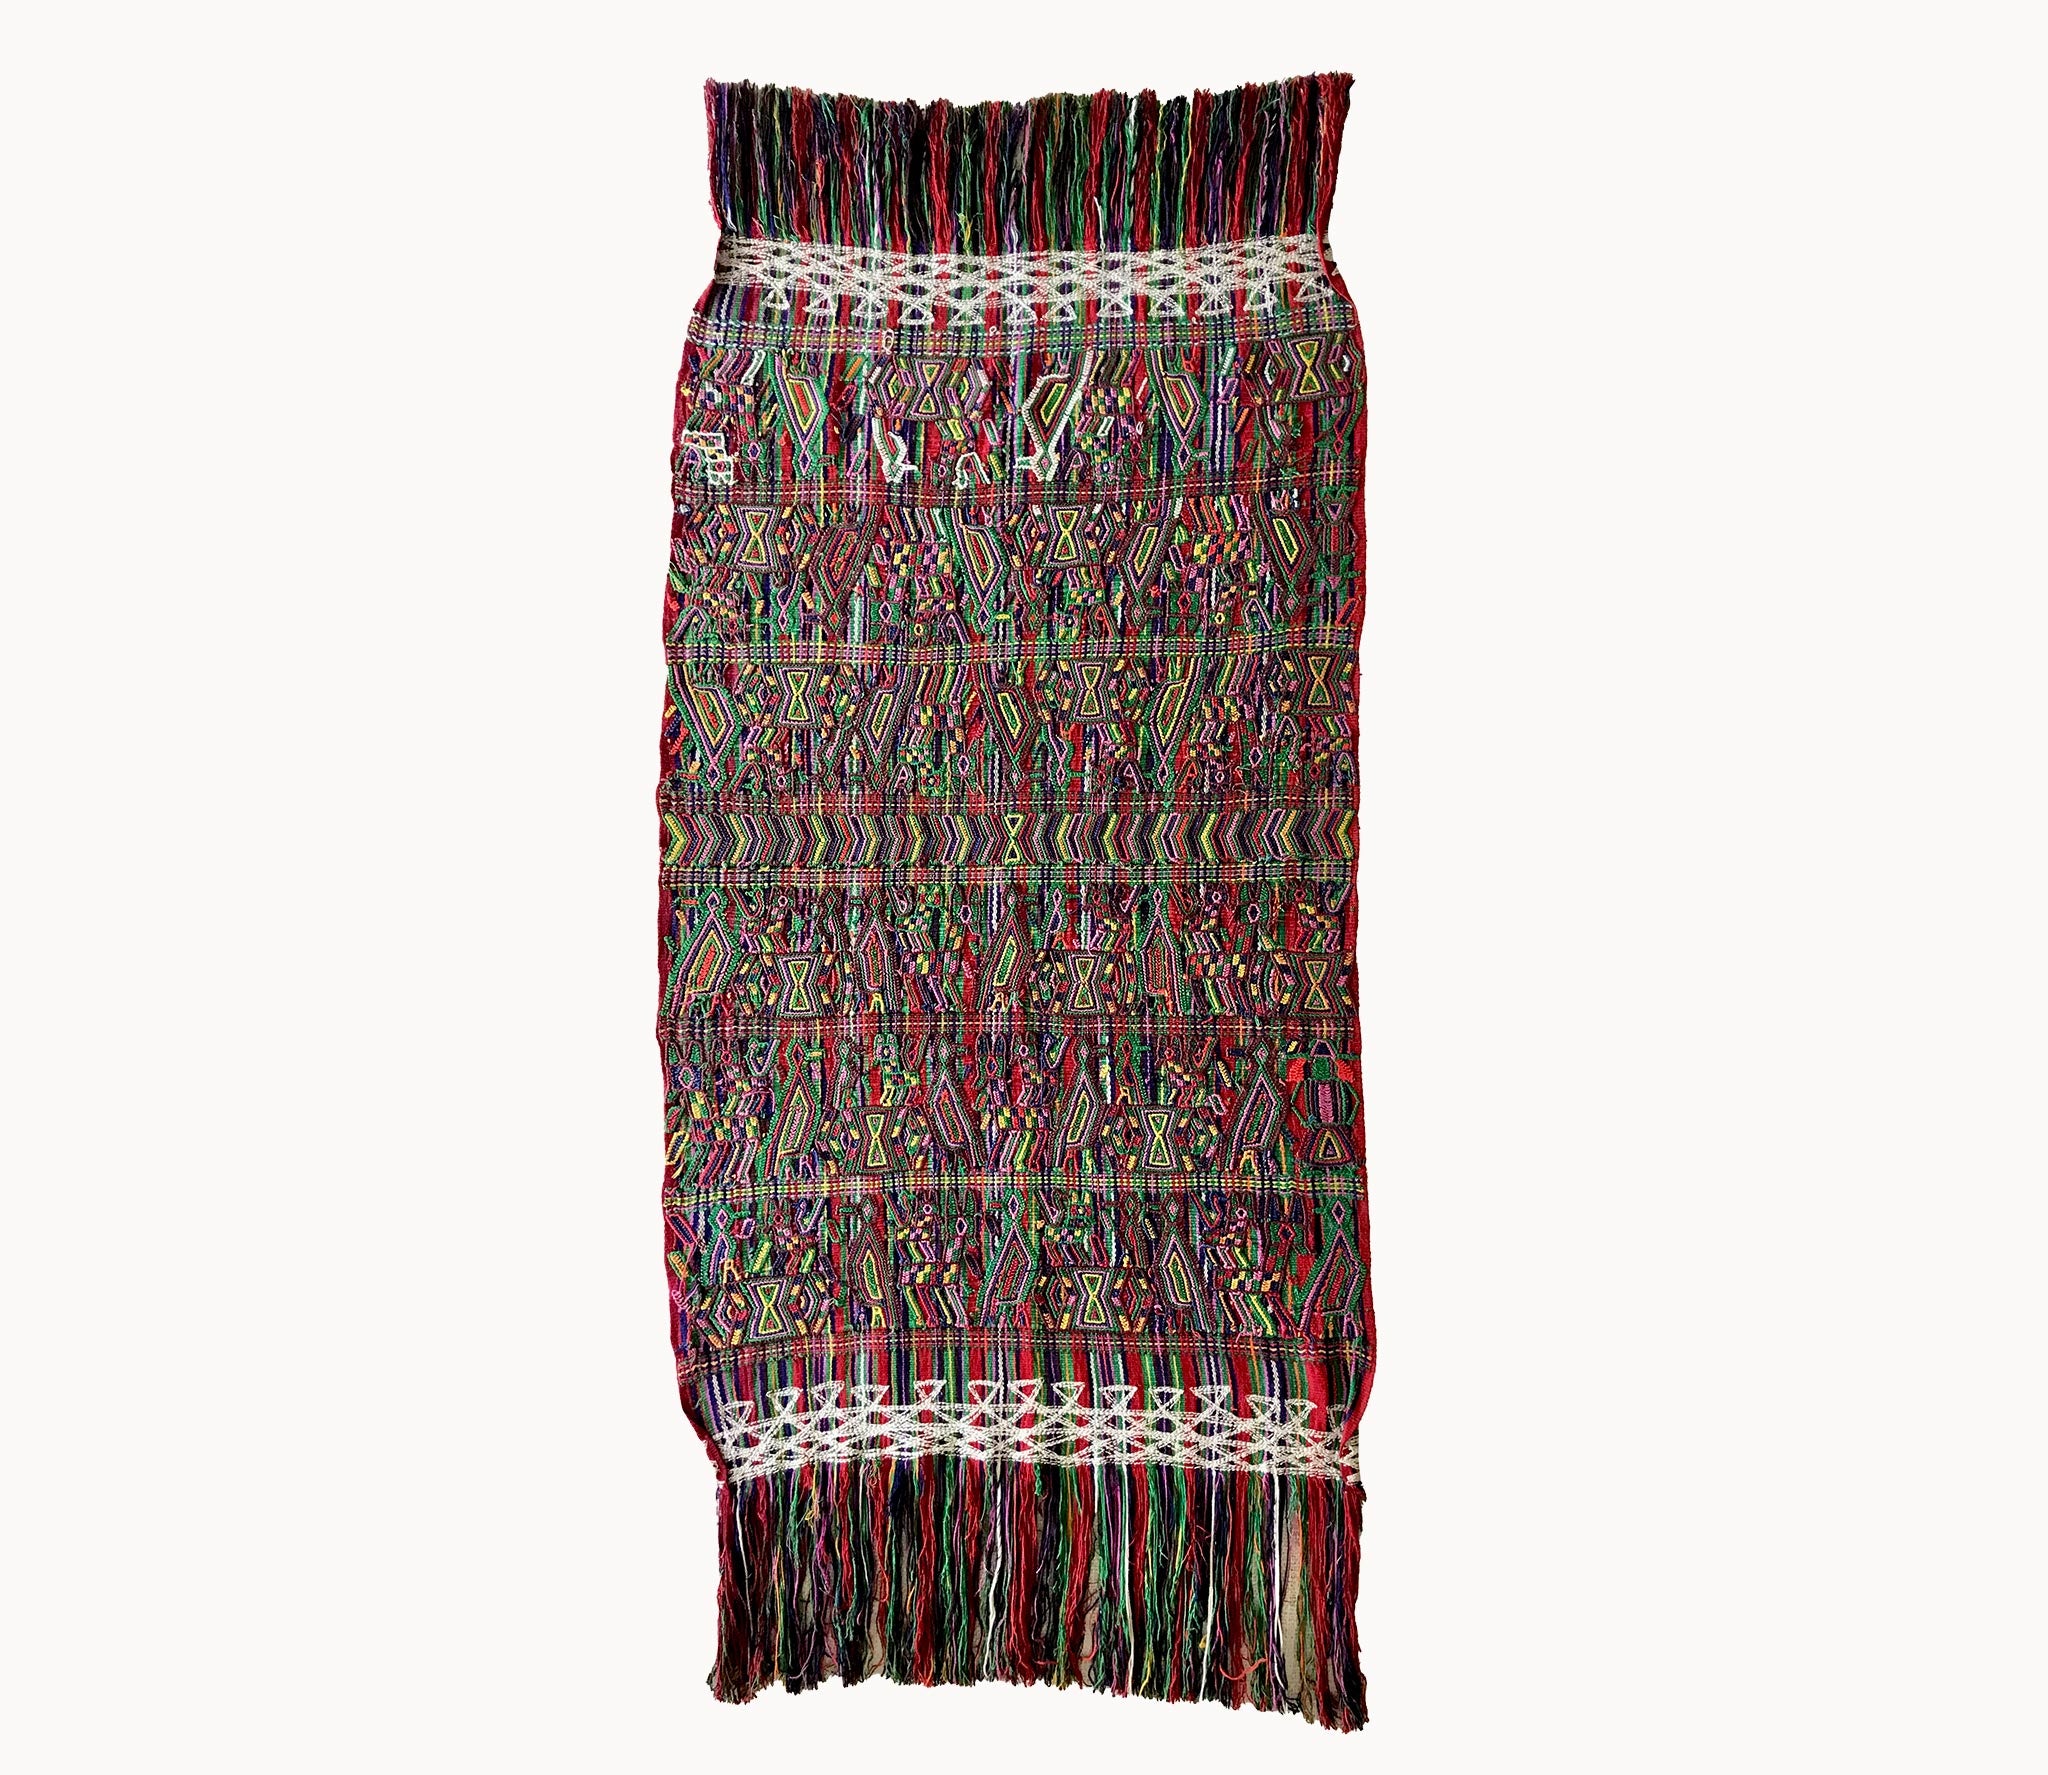 Guatemalan Textile, colourful hand embroidered table runner originally a Nebaj tzute